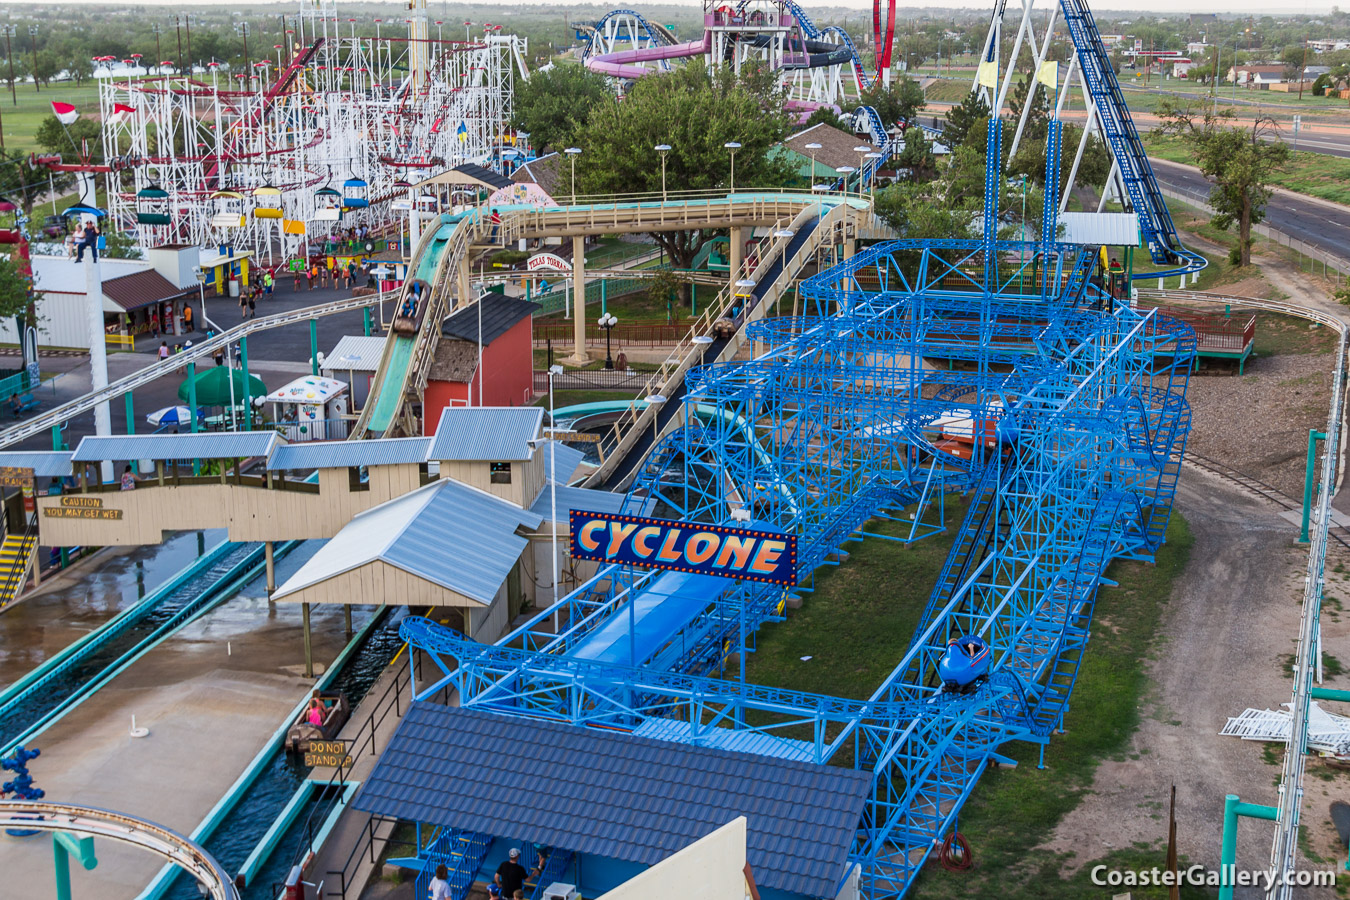 Aerial view of the Wonderland Amusement Park in Amarillo, Texas